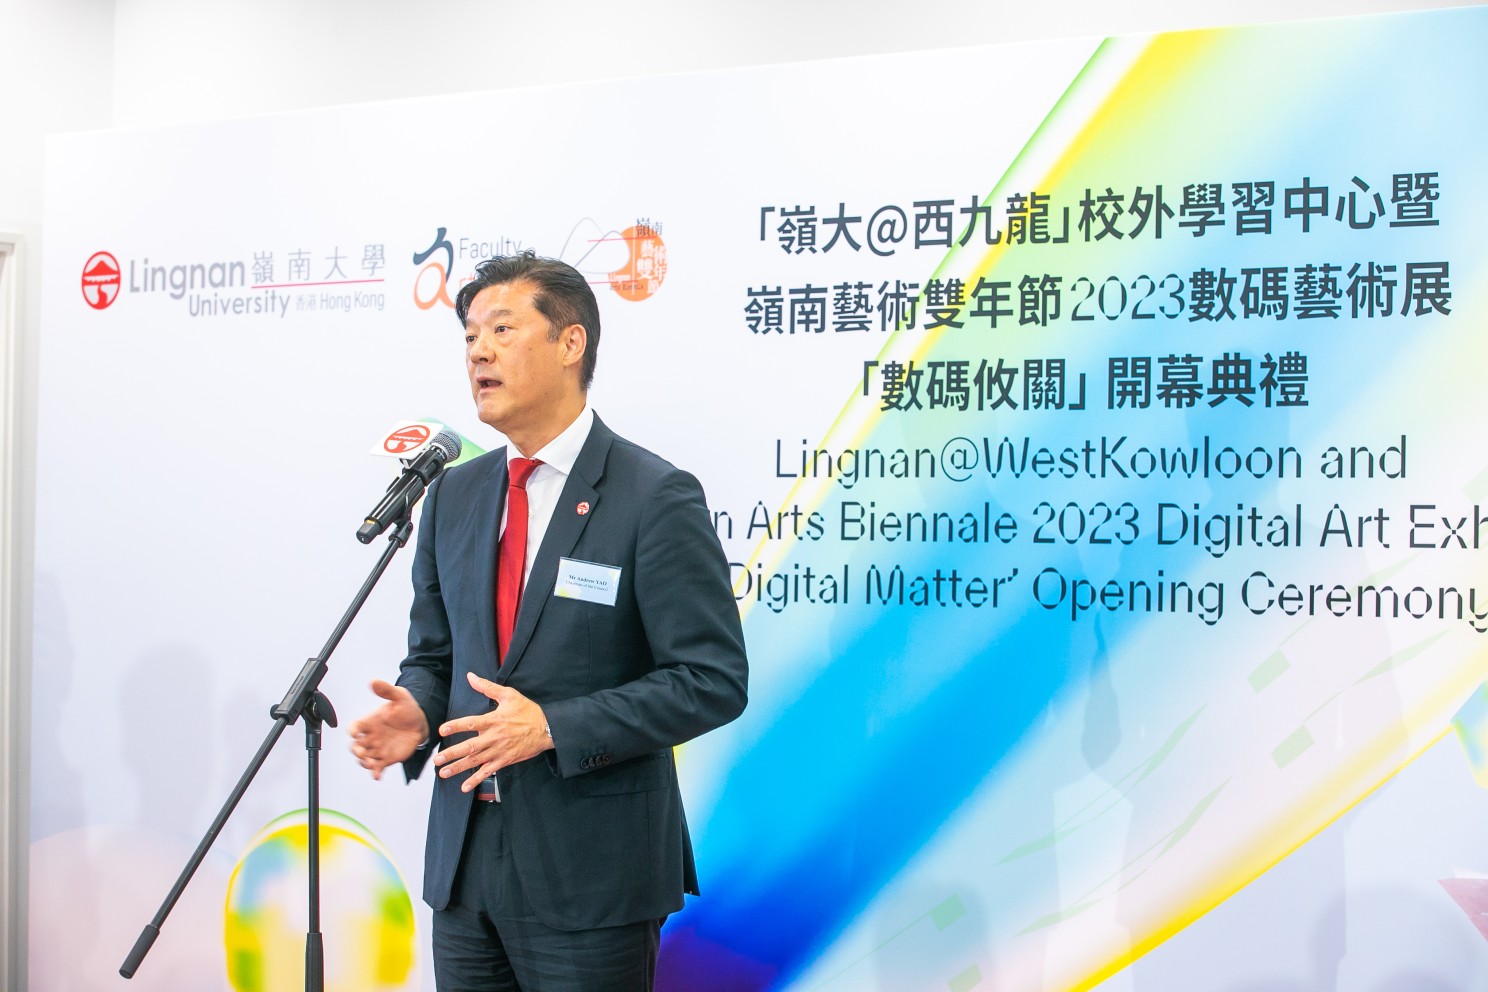 Mr Andrew Yao Cho-fai, Chairman of the Council of Lingnan University